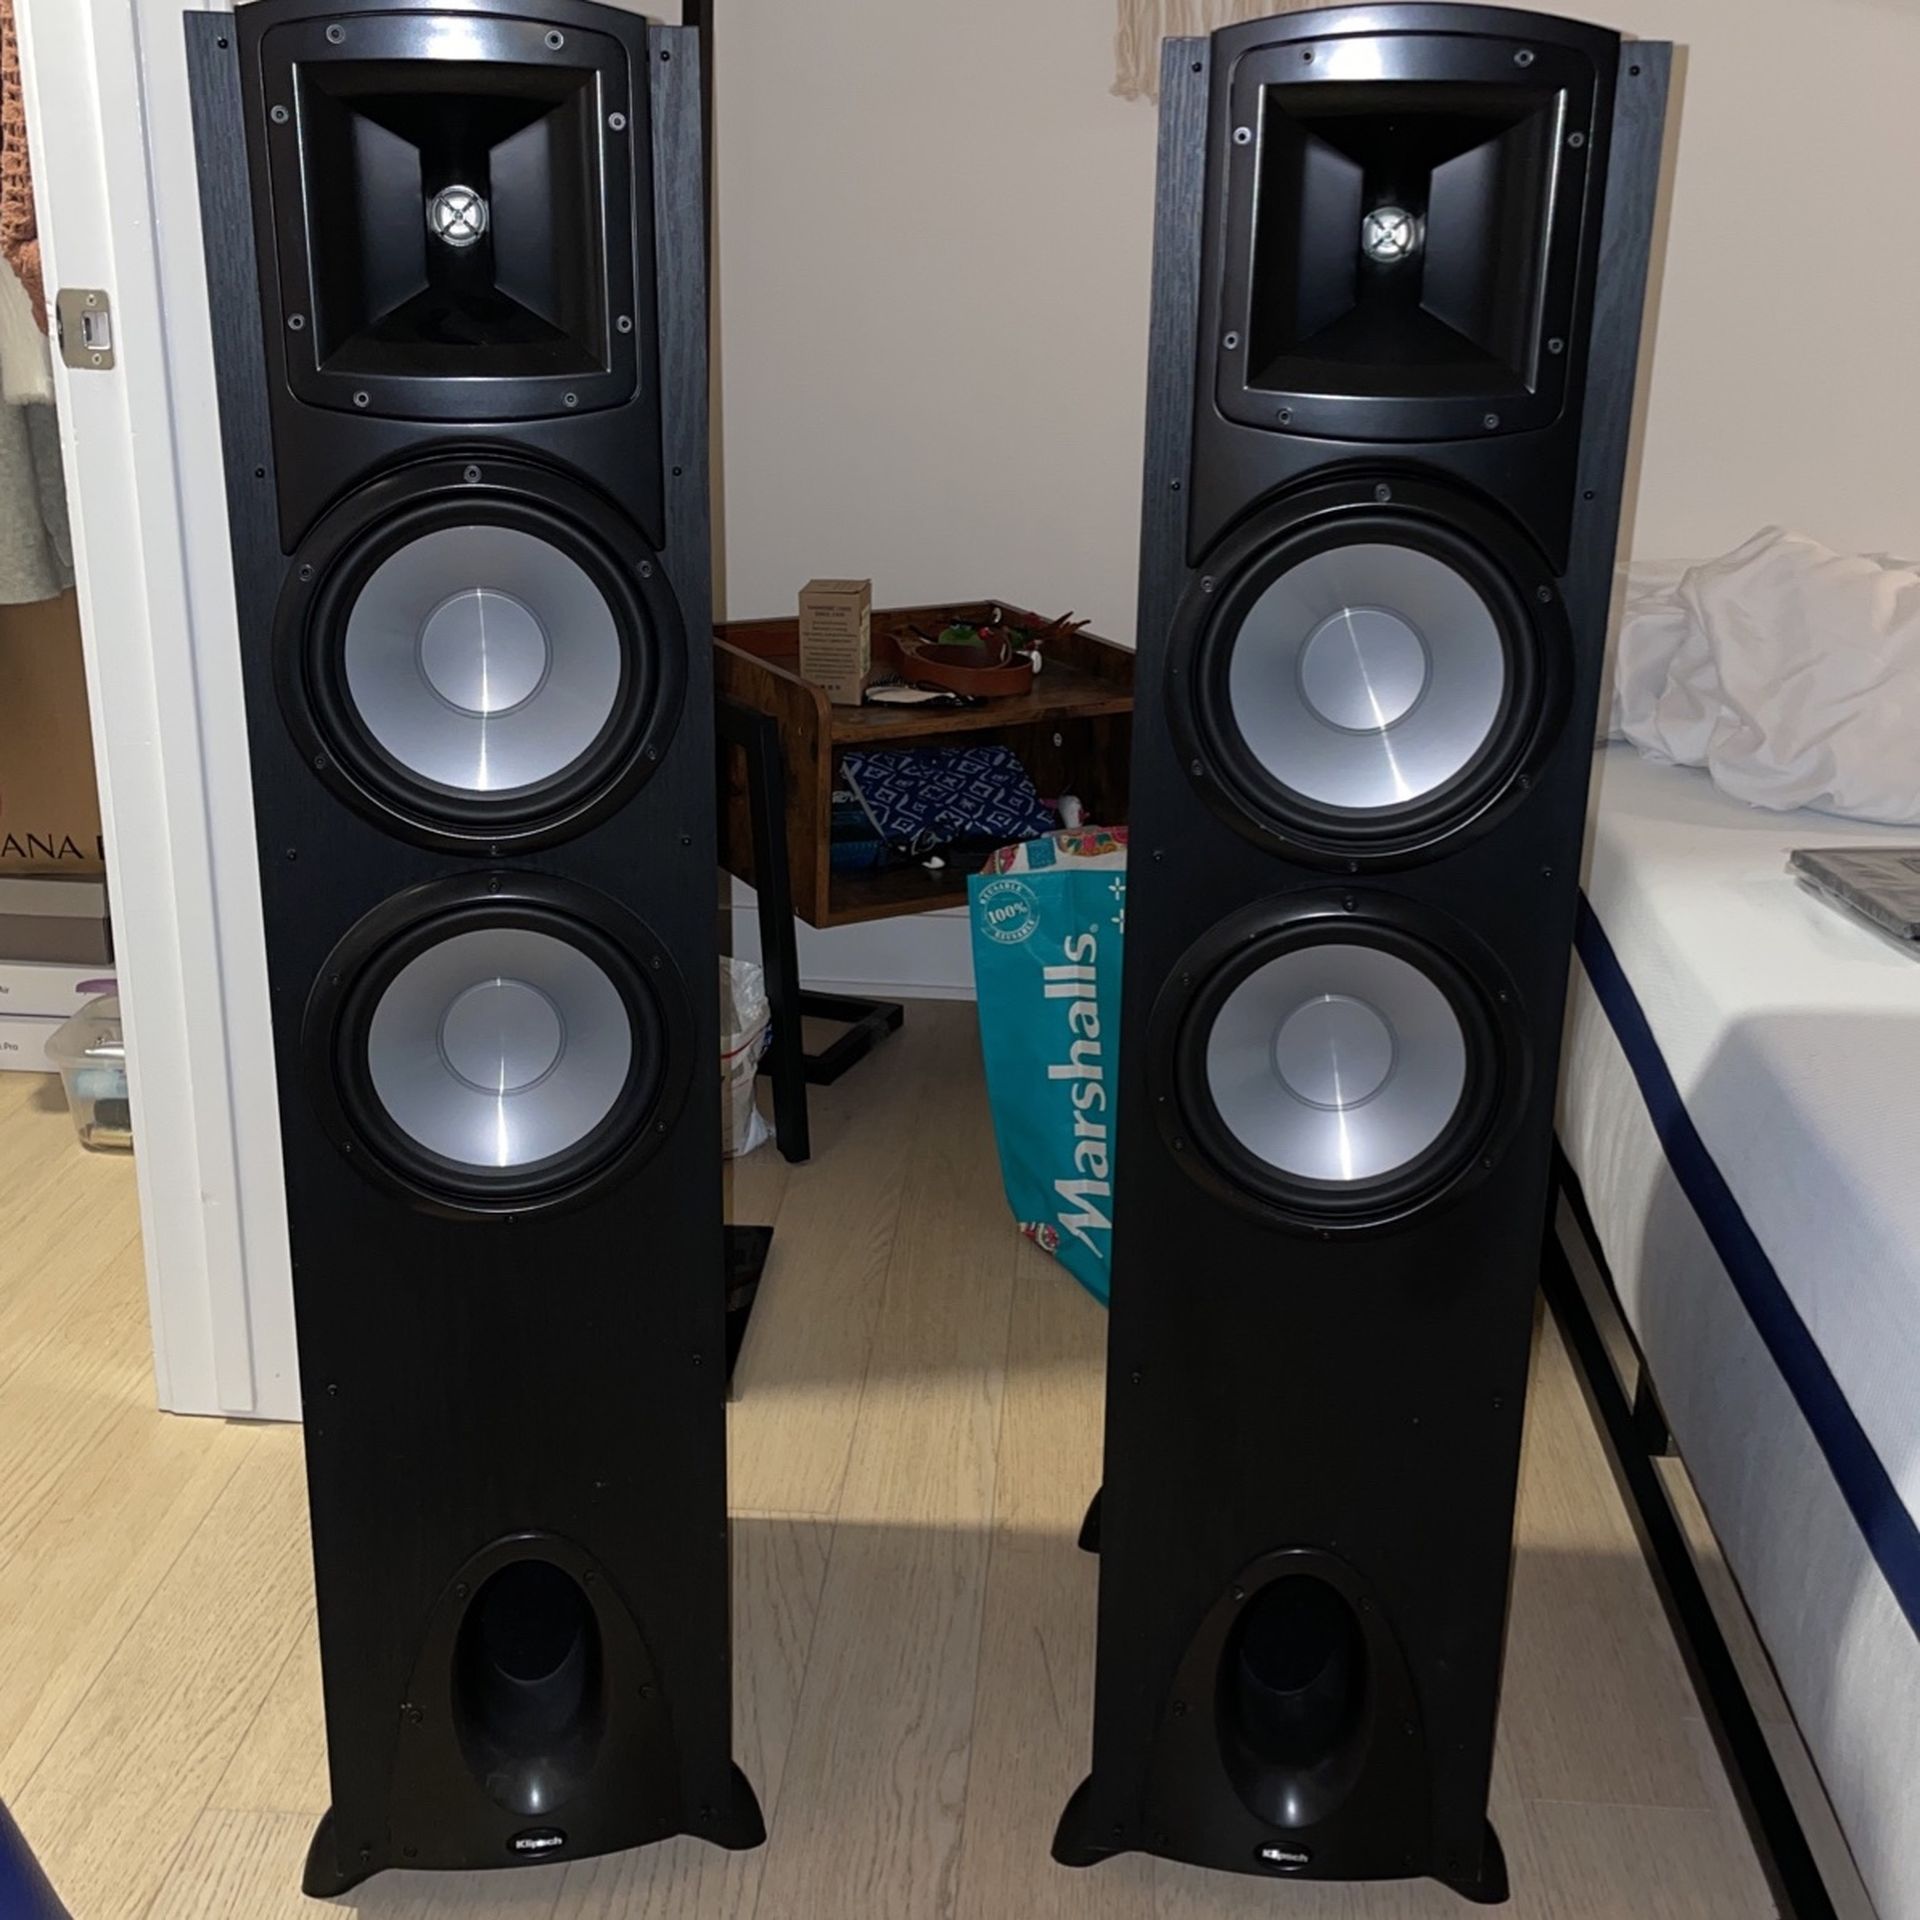 Pair of Klipsch Speakers and Denon AVR